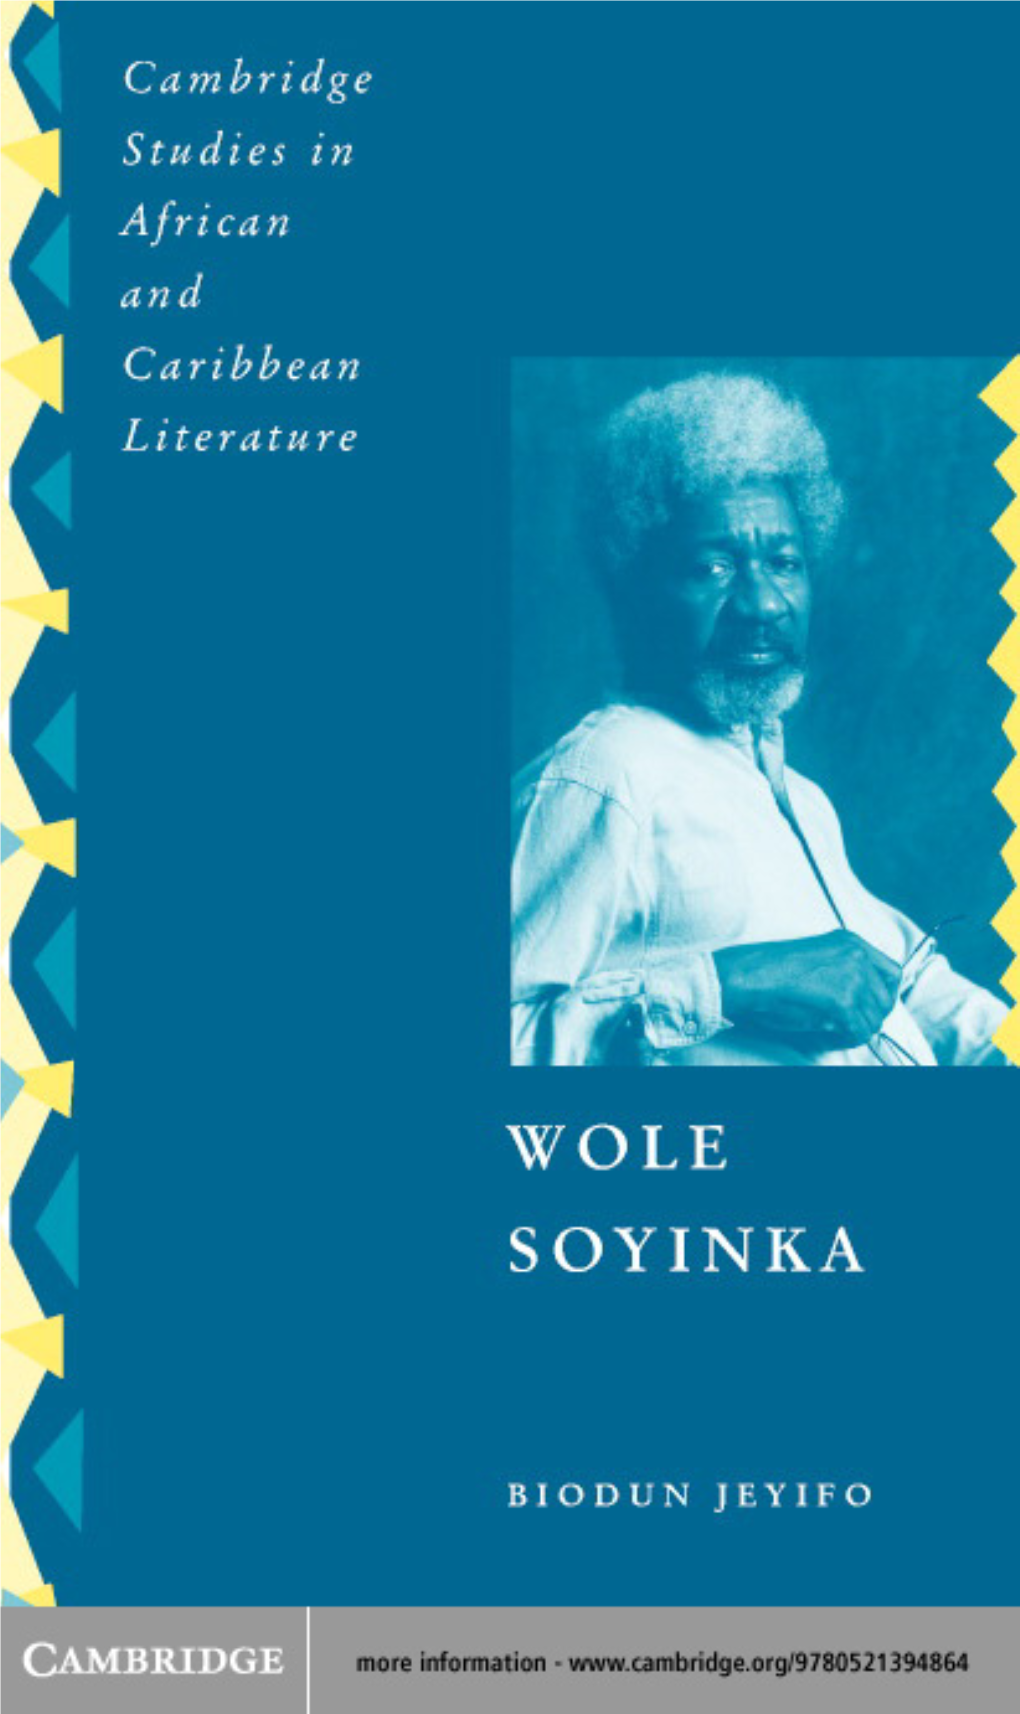 WOLE SOYINKA: Politics, Poetics and Postcolonialism